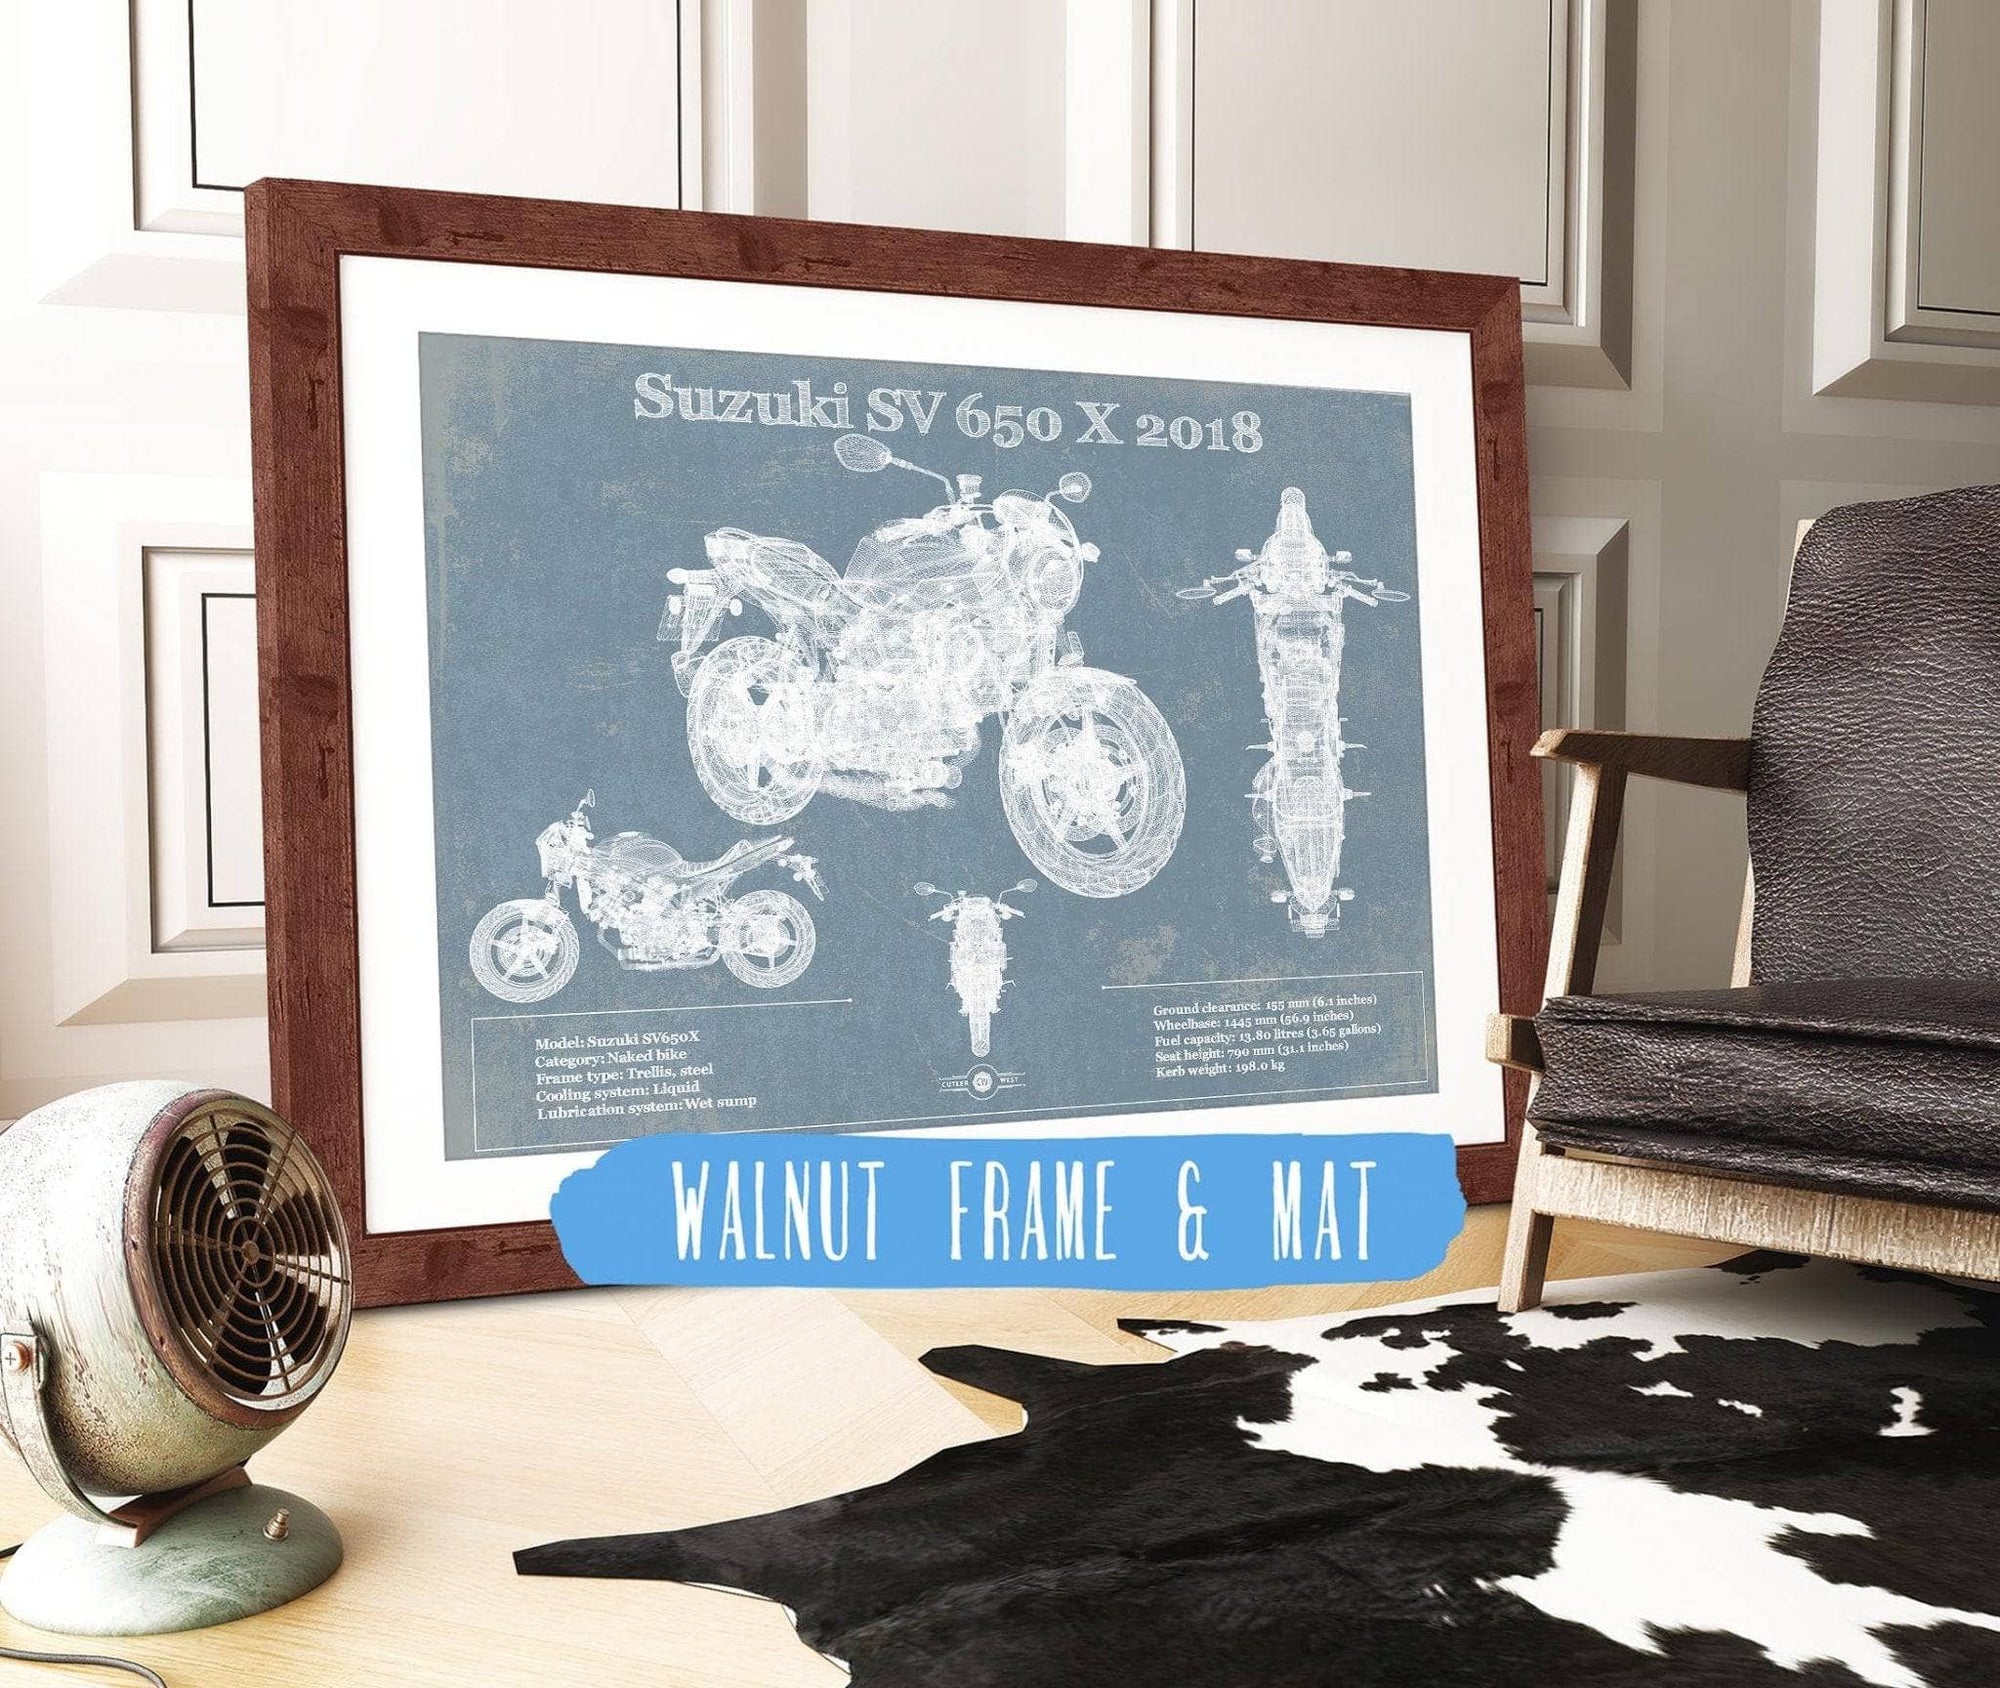 Cutler West 14" x 11" / Walnut Frame & Mat Suzuki SV 650 X 2018 Blueprint Motorcycle Patent Print 845000300_29998